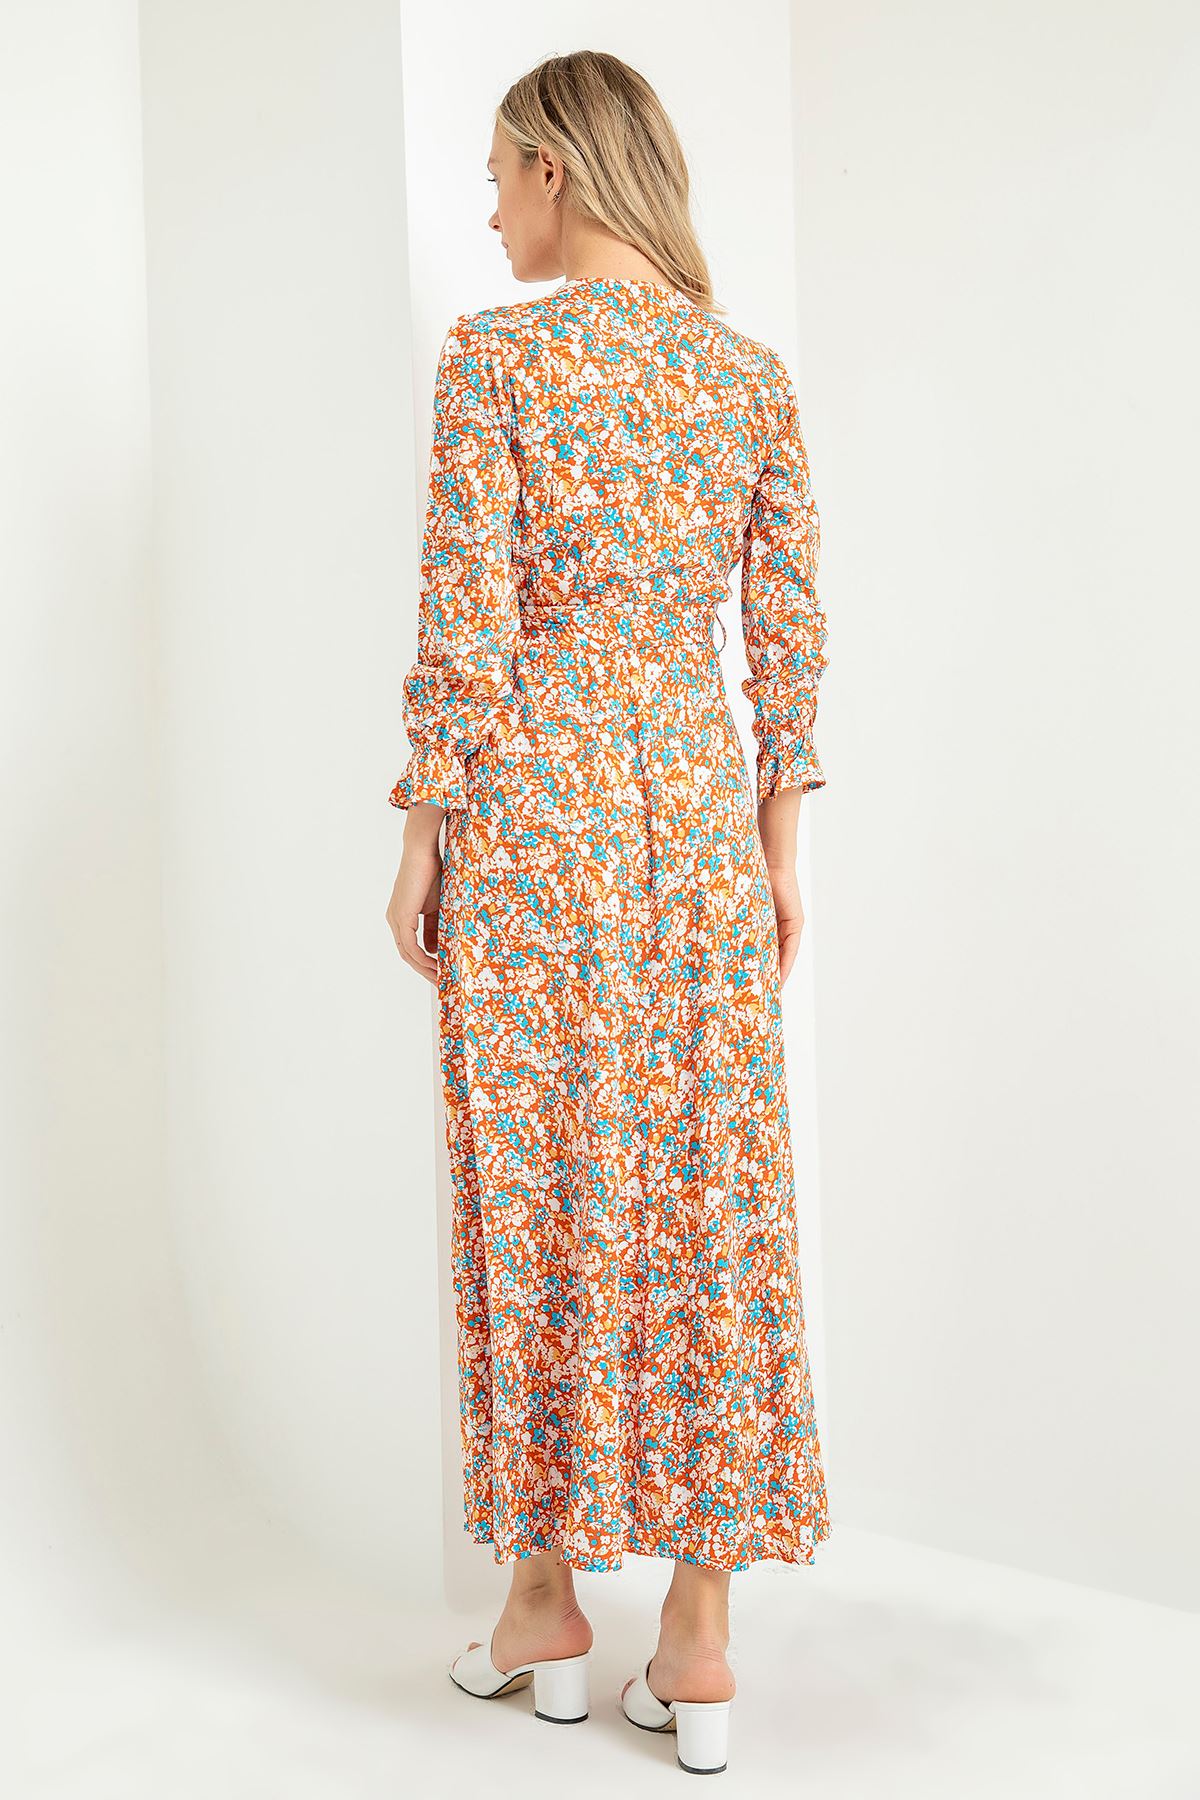 Viscose Fabric Long Sleeve V-Neck Long A Cut Flower Print Belted Women Dress - Orange